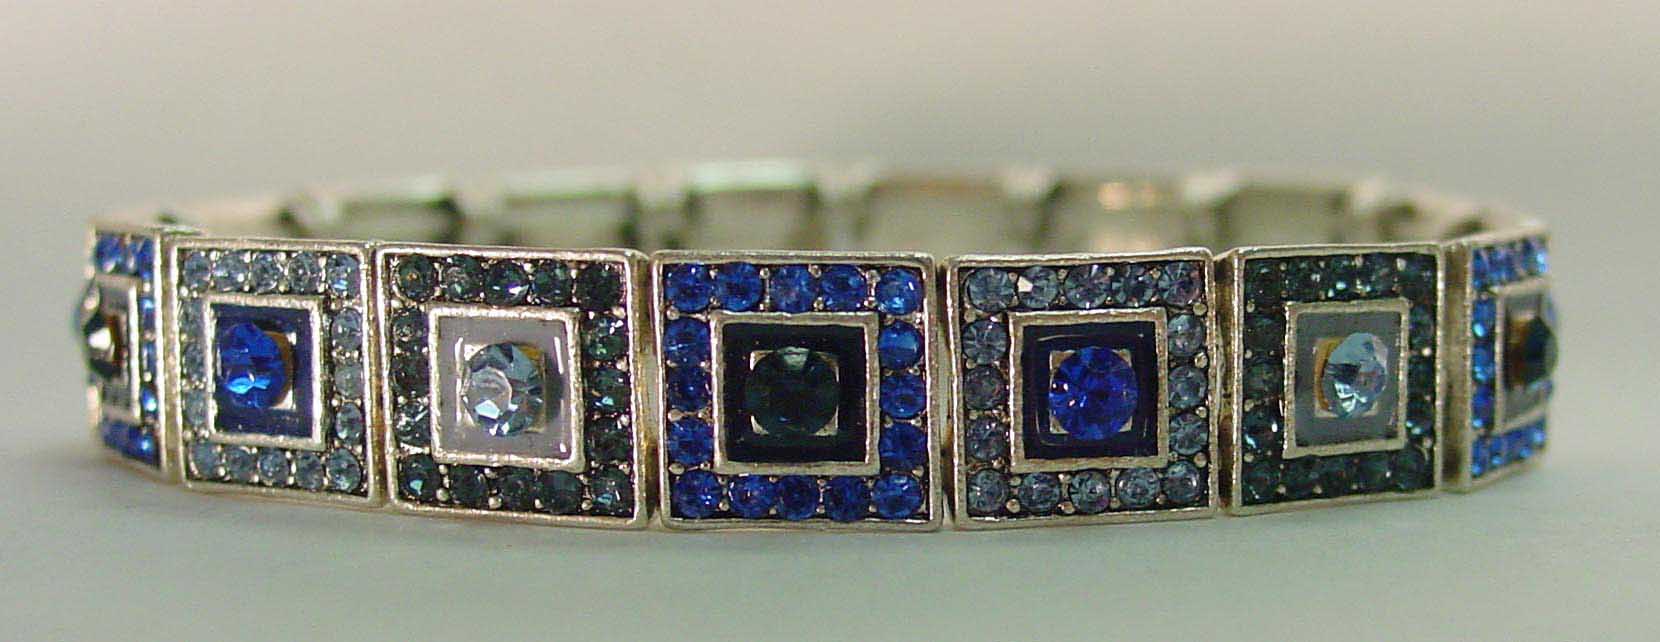 Navy crystal rhodium plated bracelet